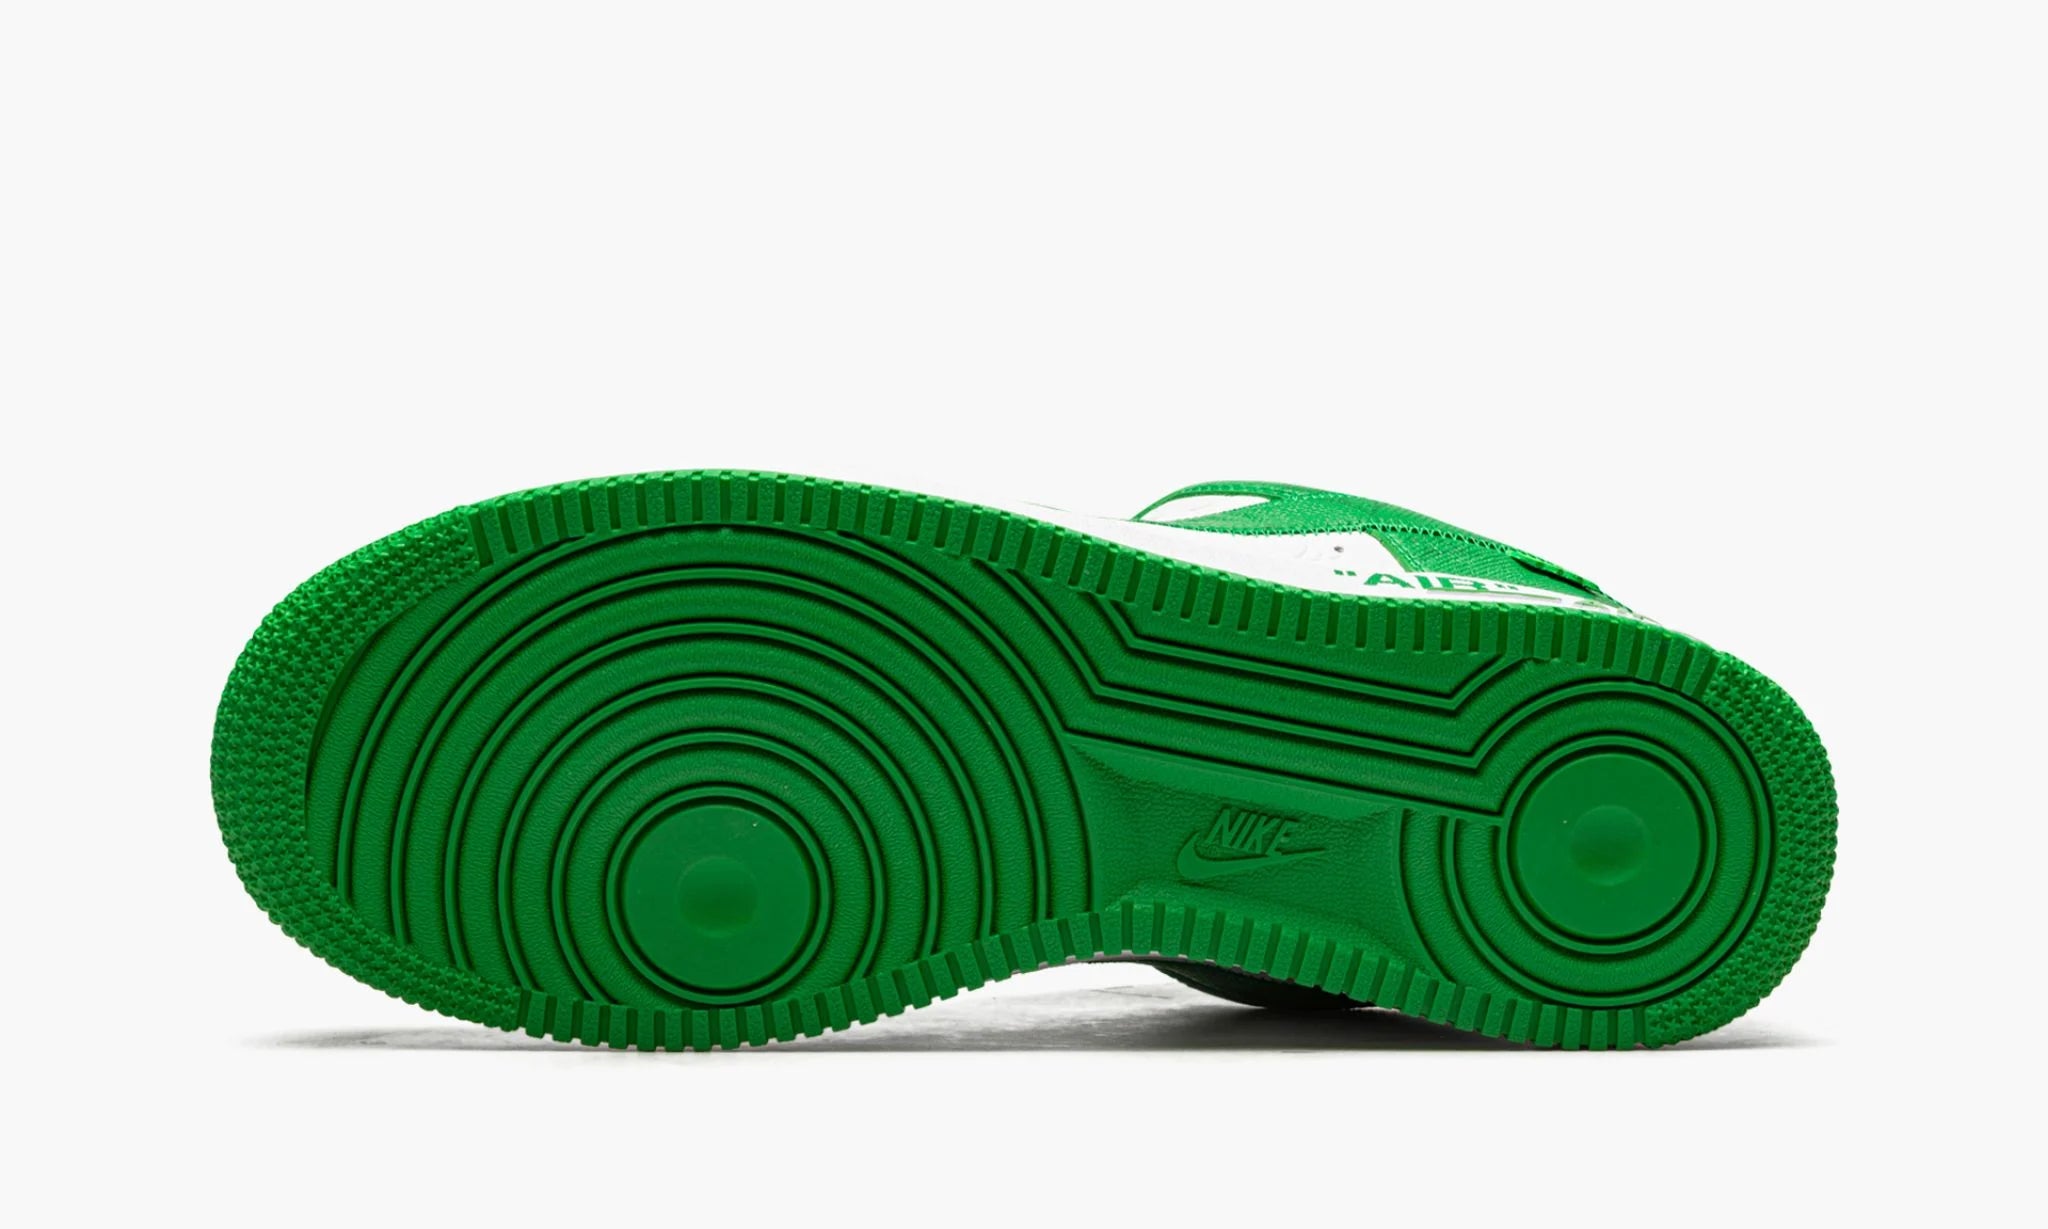 Louis Vuitton x Nike Air Force 1 Low "Virgil Abloh" White/Green